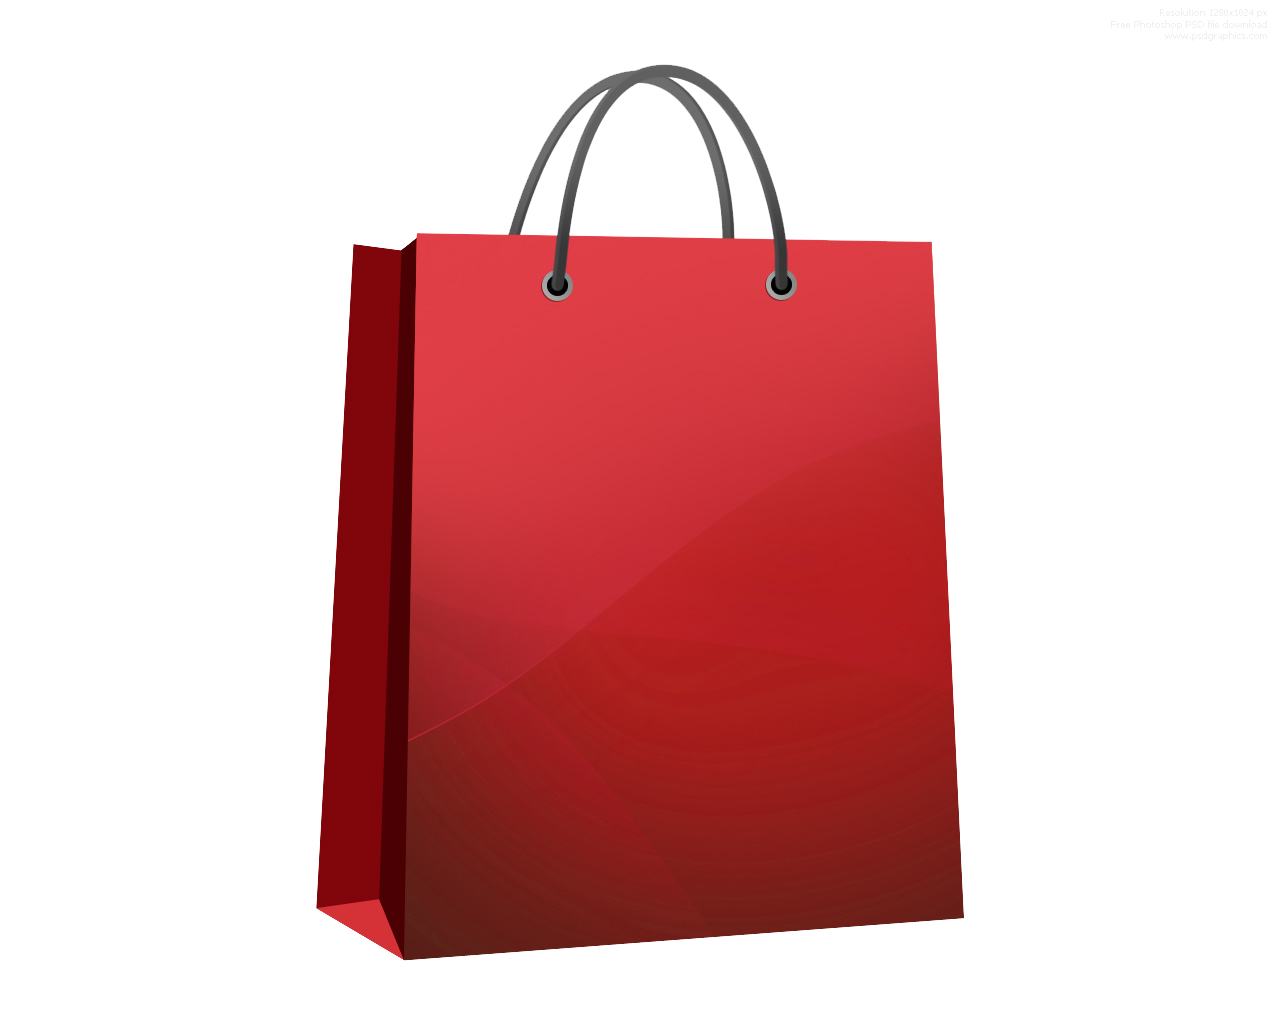 Shopping Bag PNG Image Background